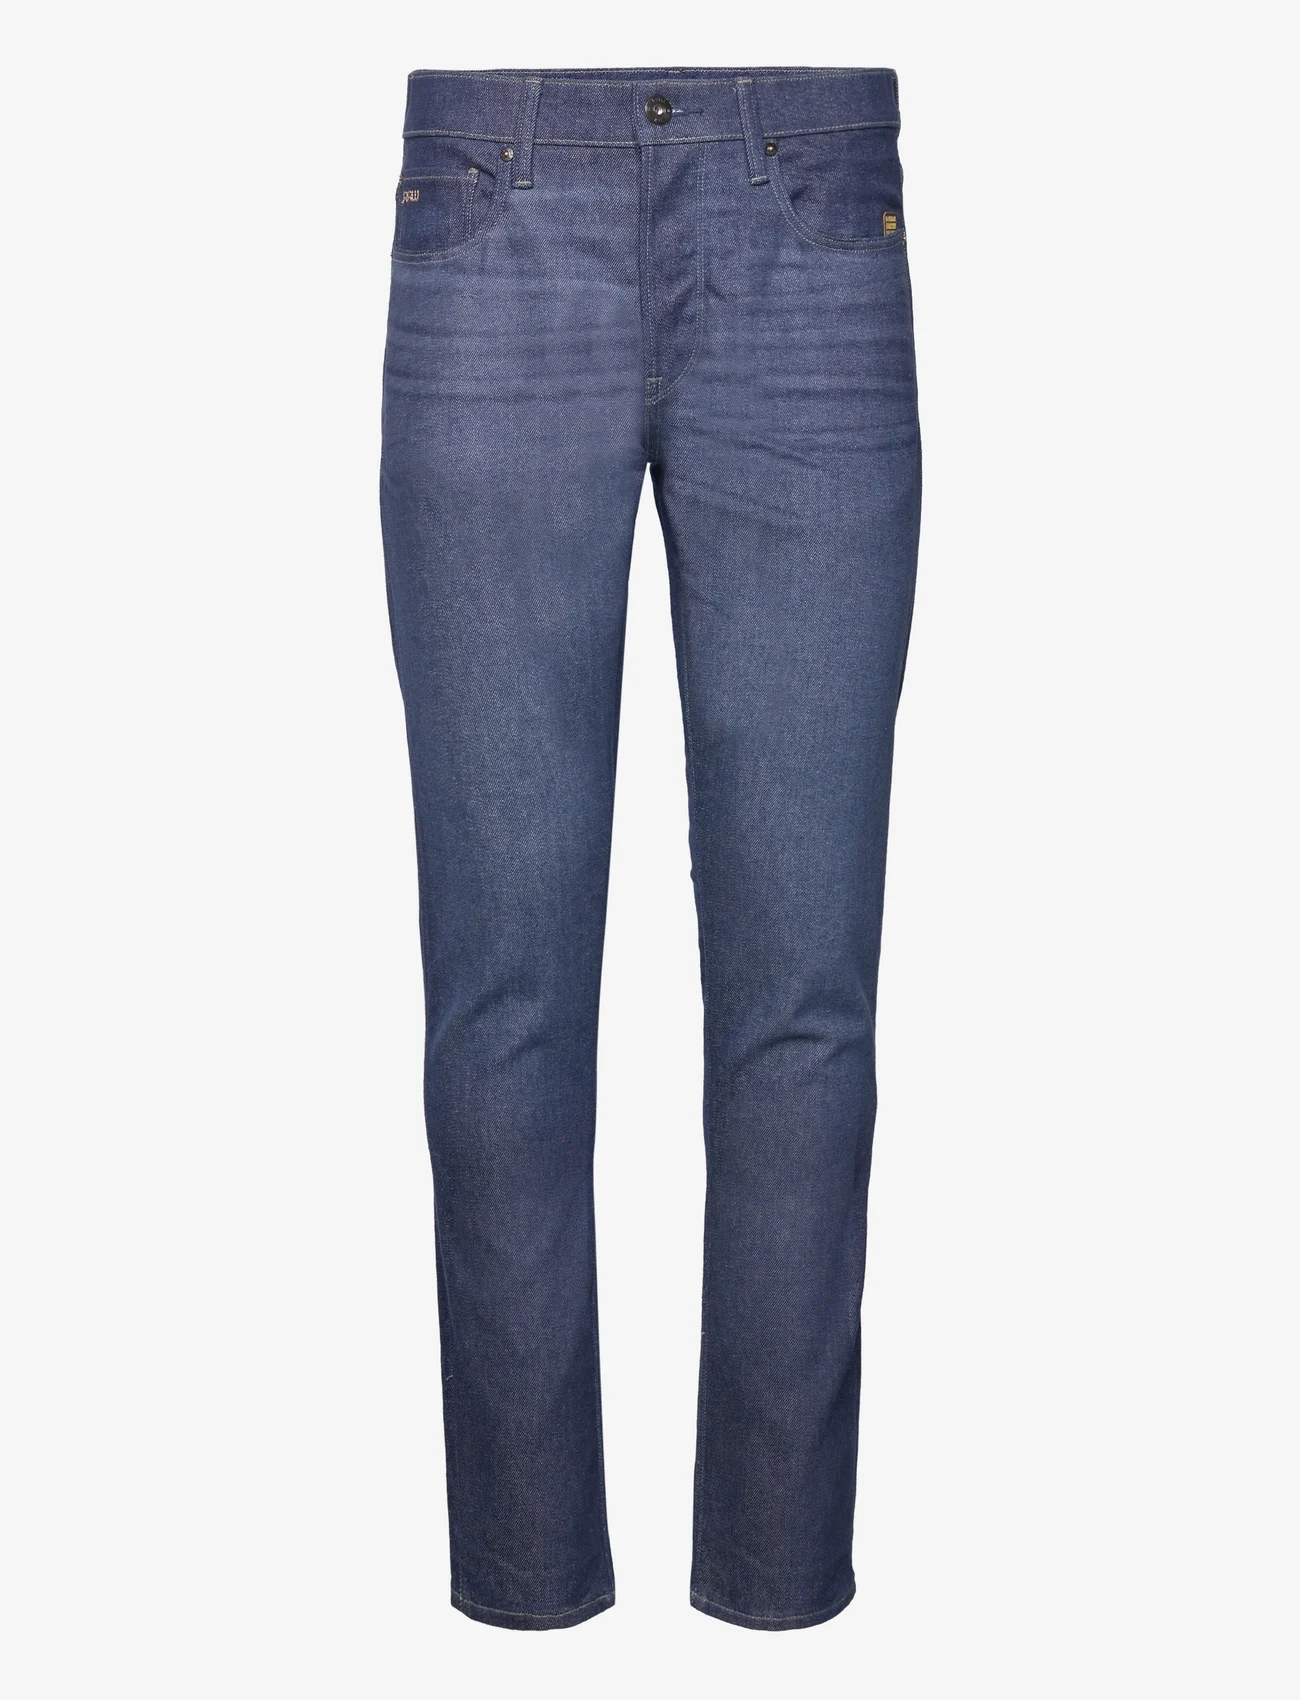 G-Star RAW - 3301 Slim - slim jeans - worn in blue mine - 0